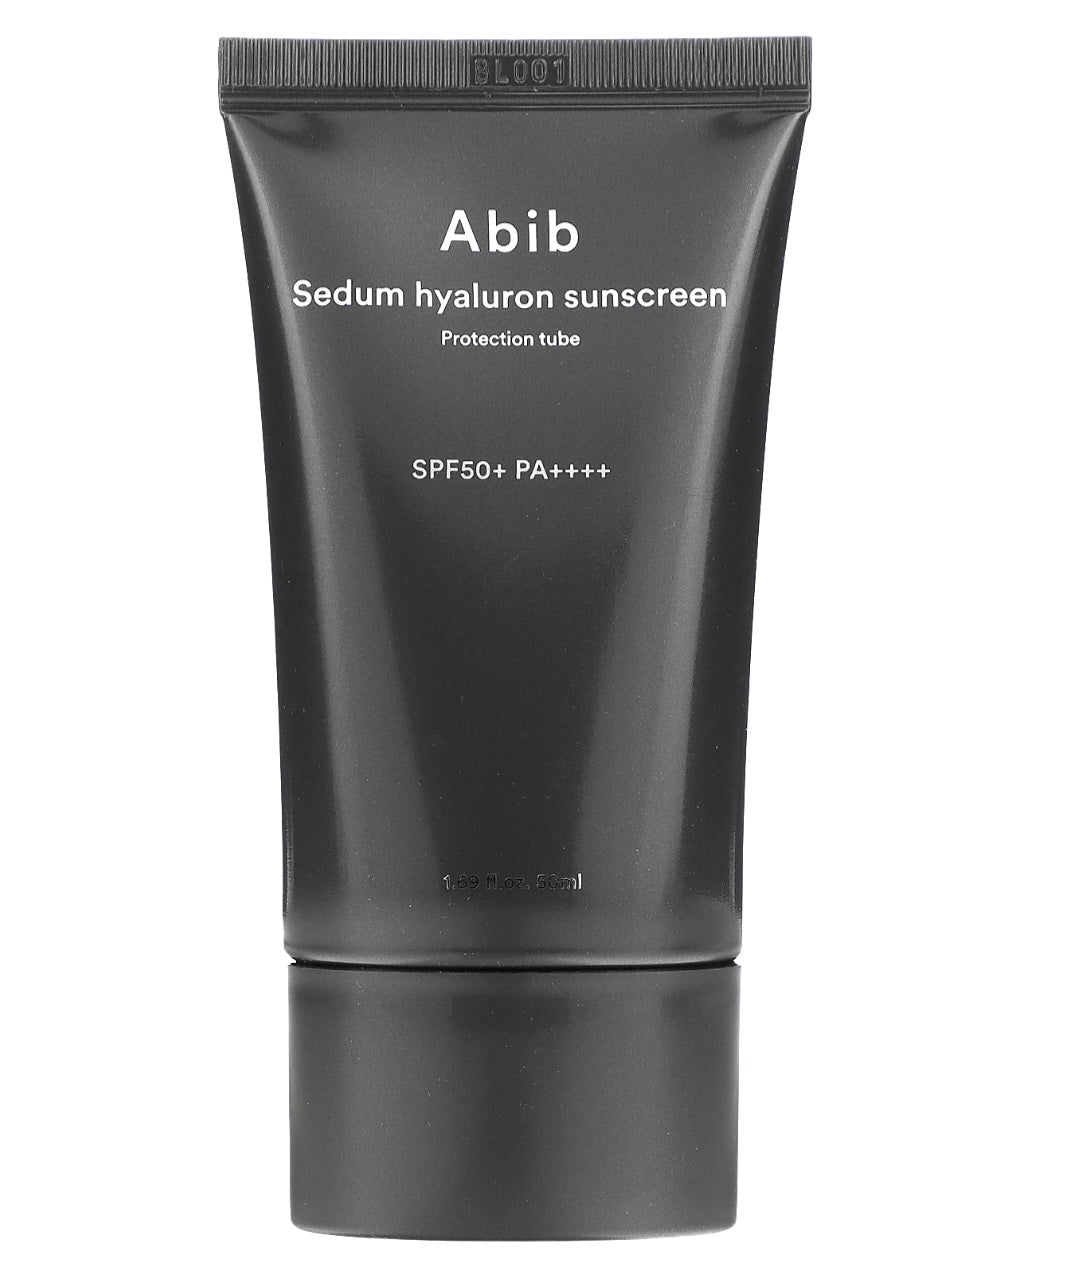 Abib

Sedum Hyaluron Sunscreen, SPF50+ PA++++, 1.69 fl oz (50 ml)